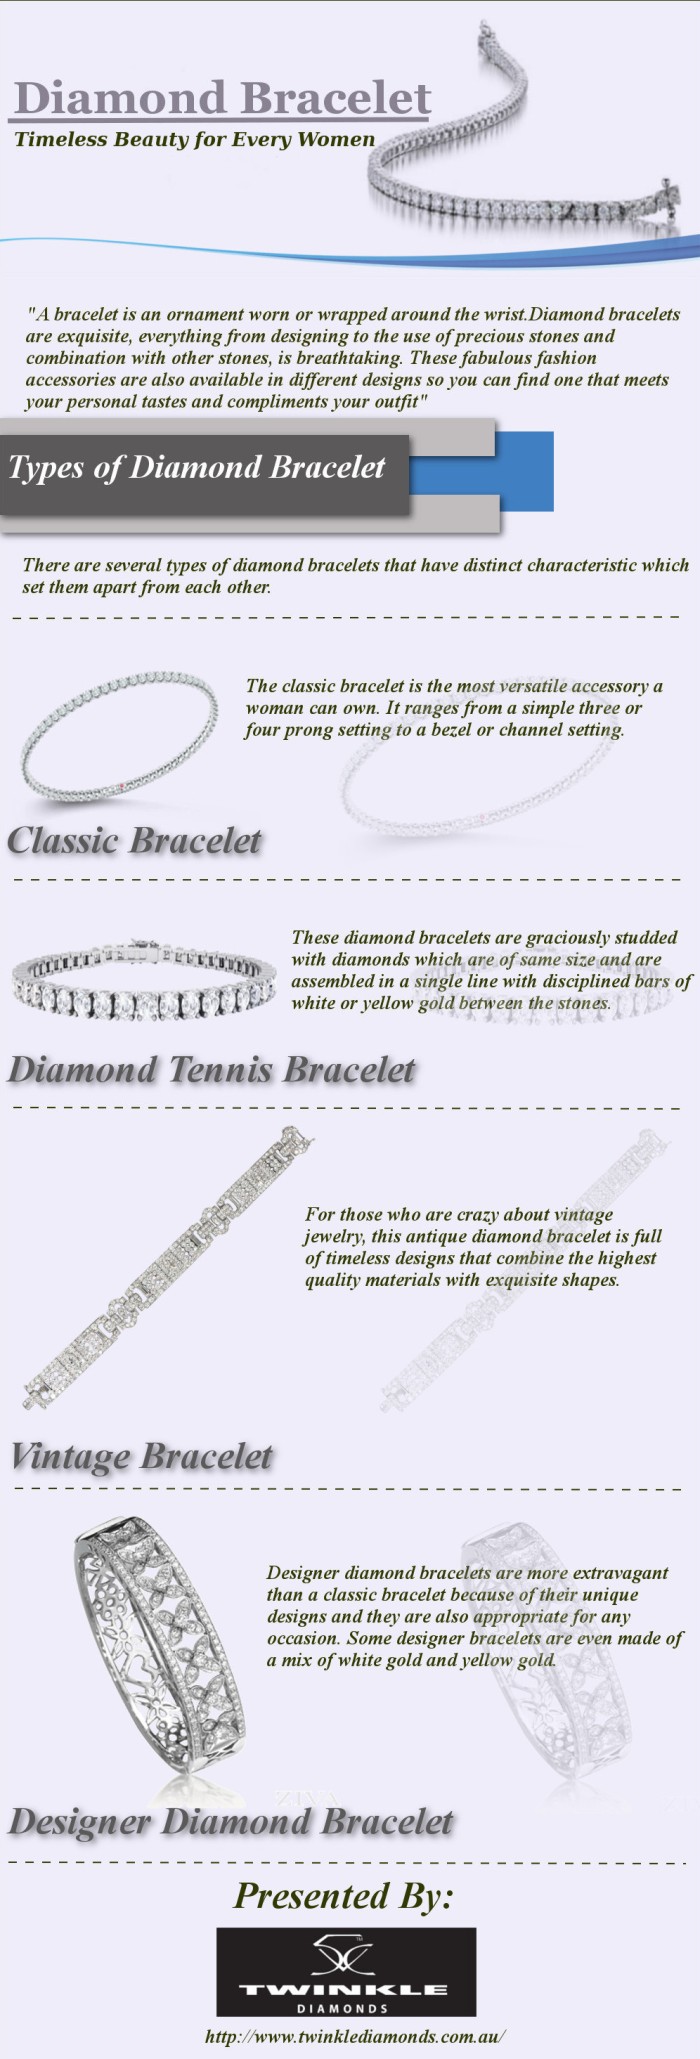 diamond-bracelet-timeless-beauty-for-every-women